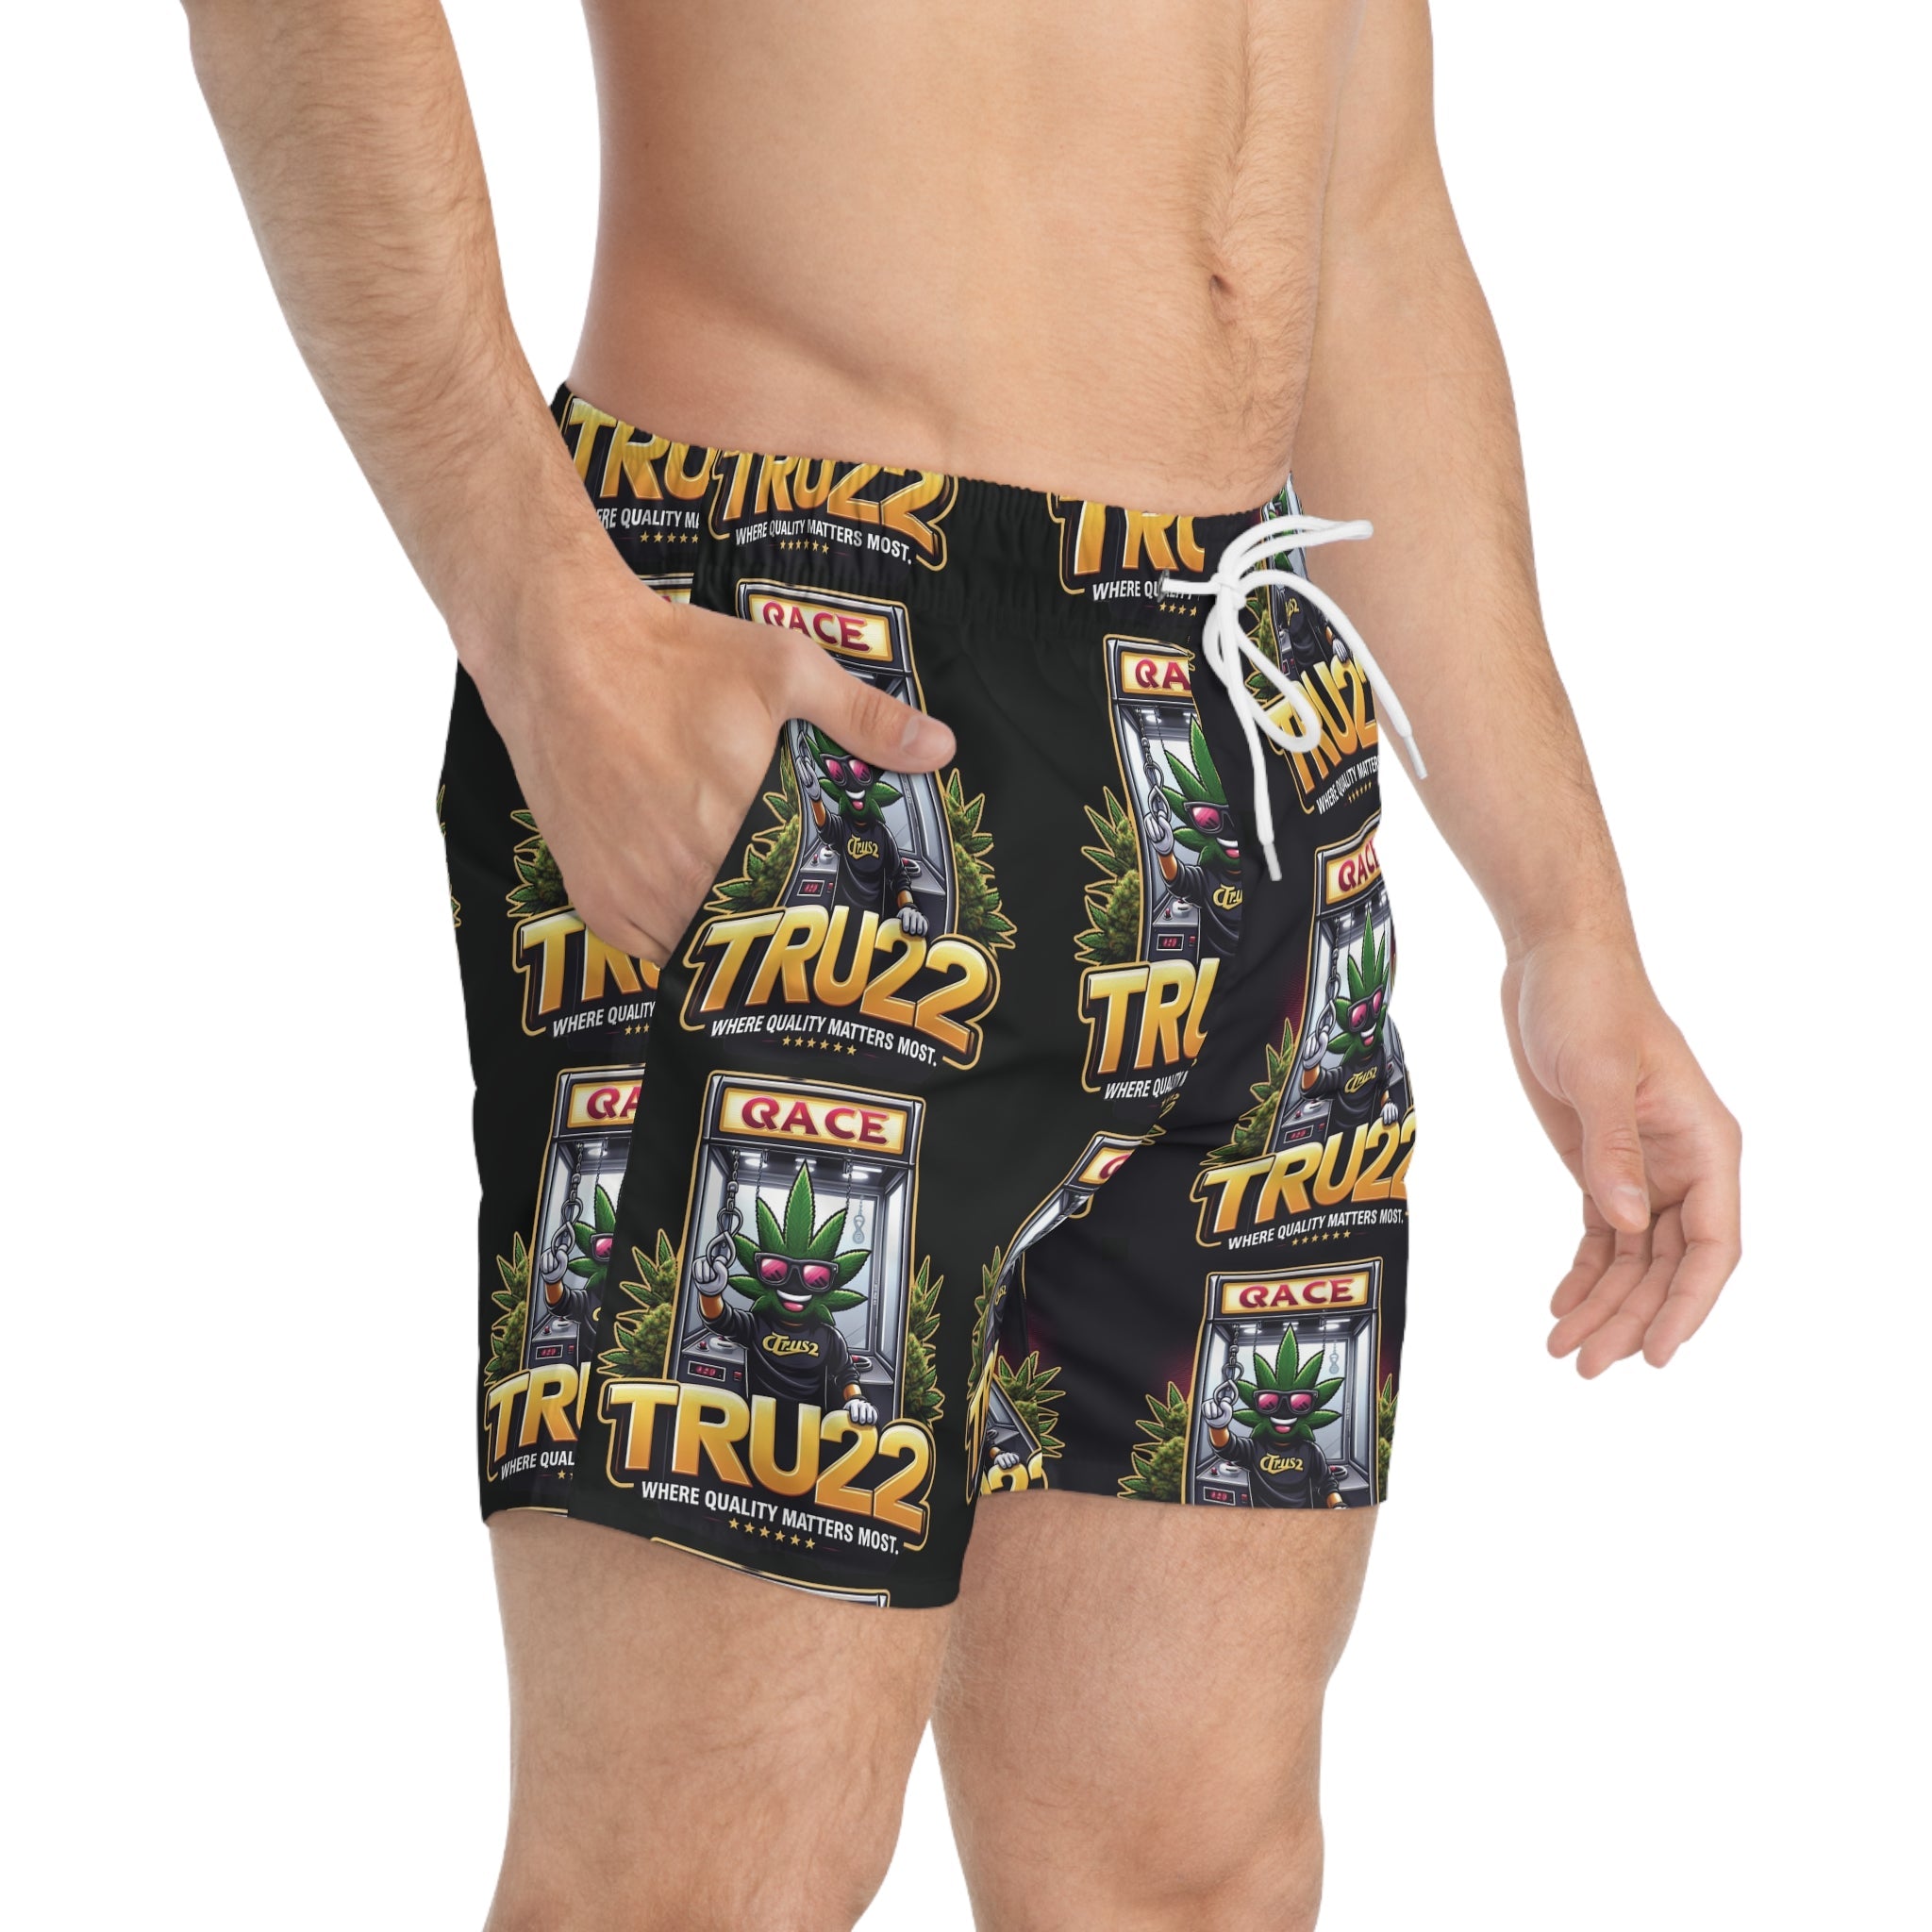 TRU2 Men's Swim Trunks - TRU2 Clothing